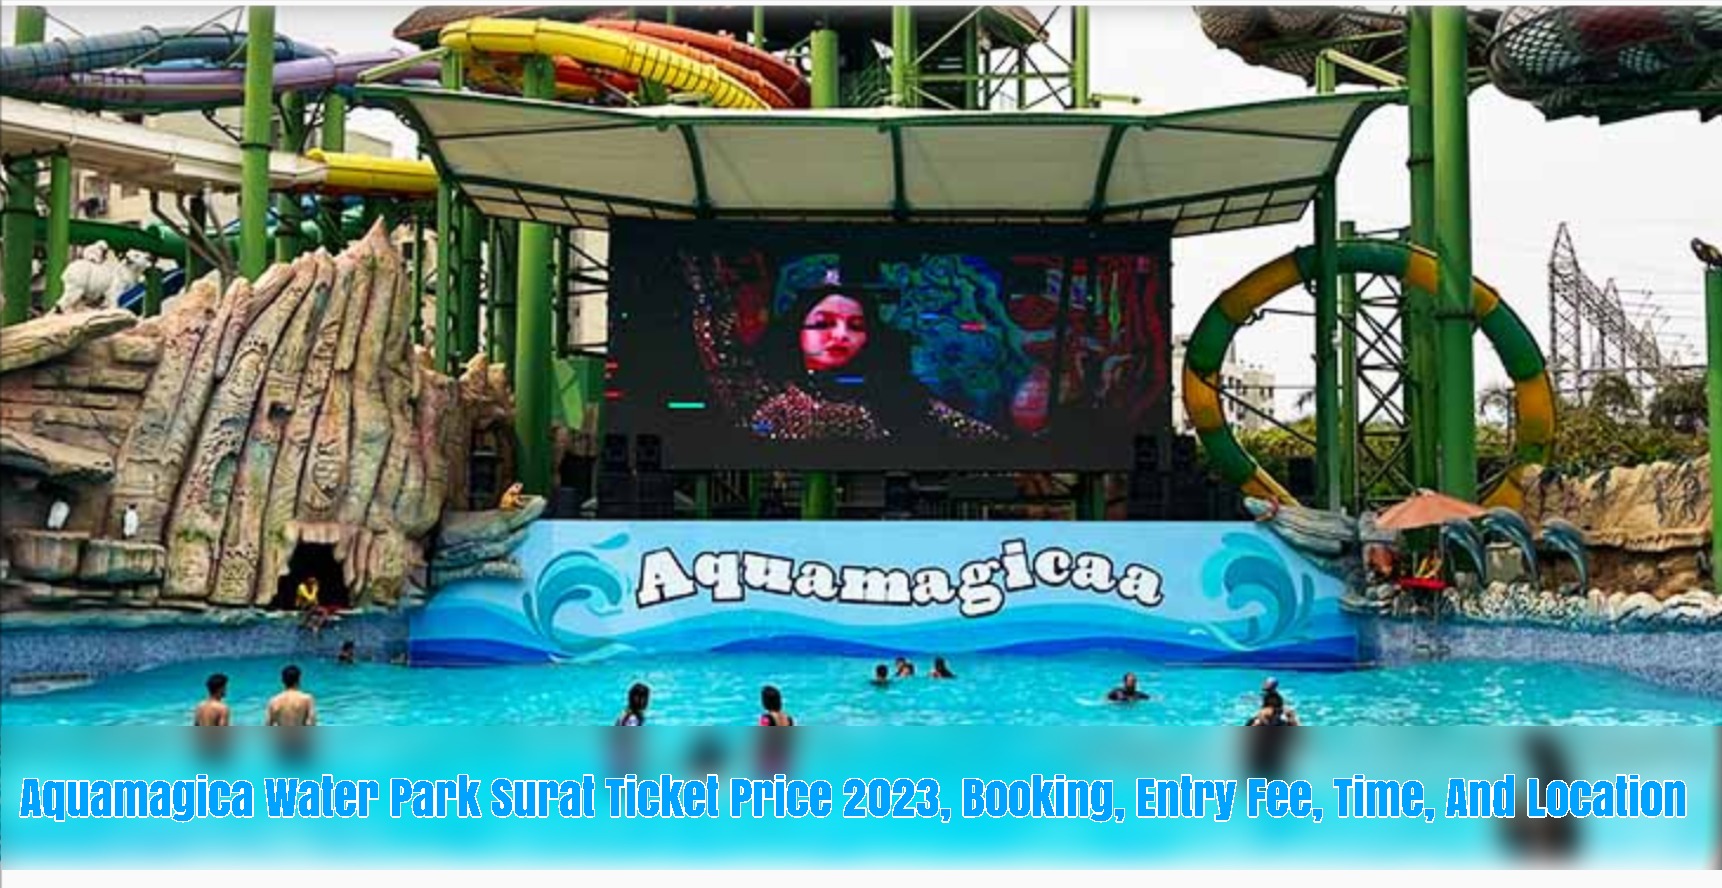 Aquamagica Water Park Surat Online Ticket Booking Link